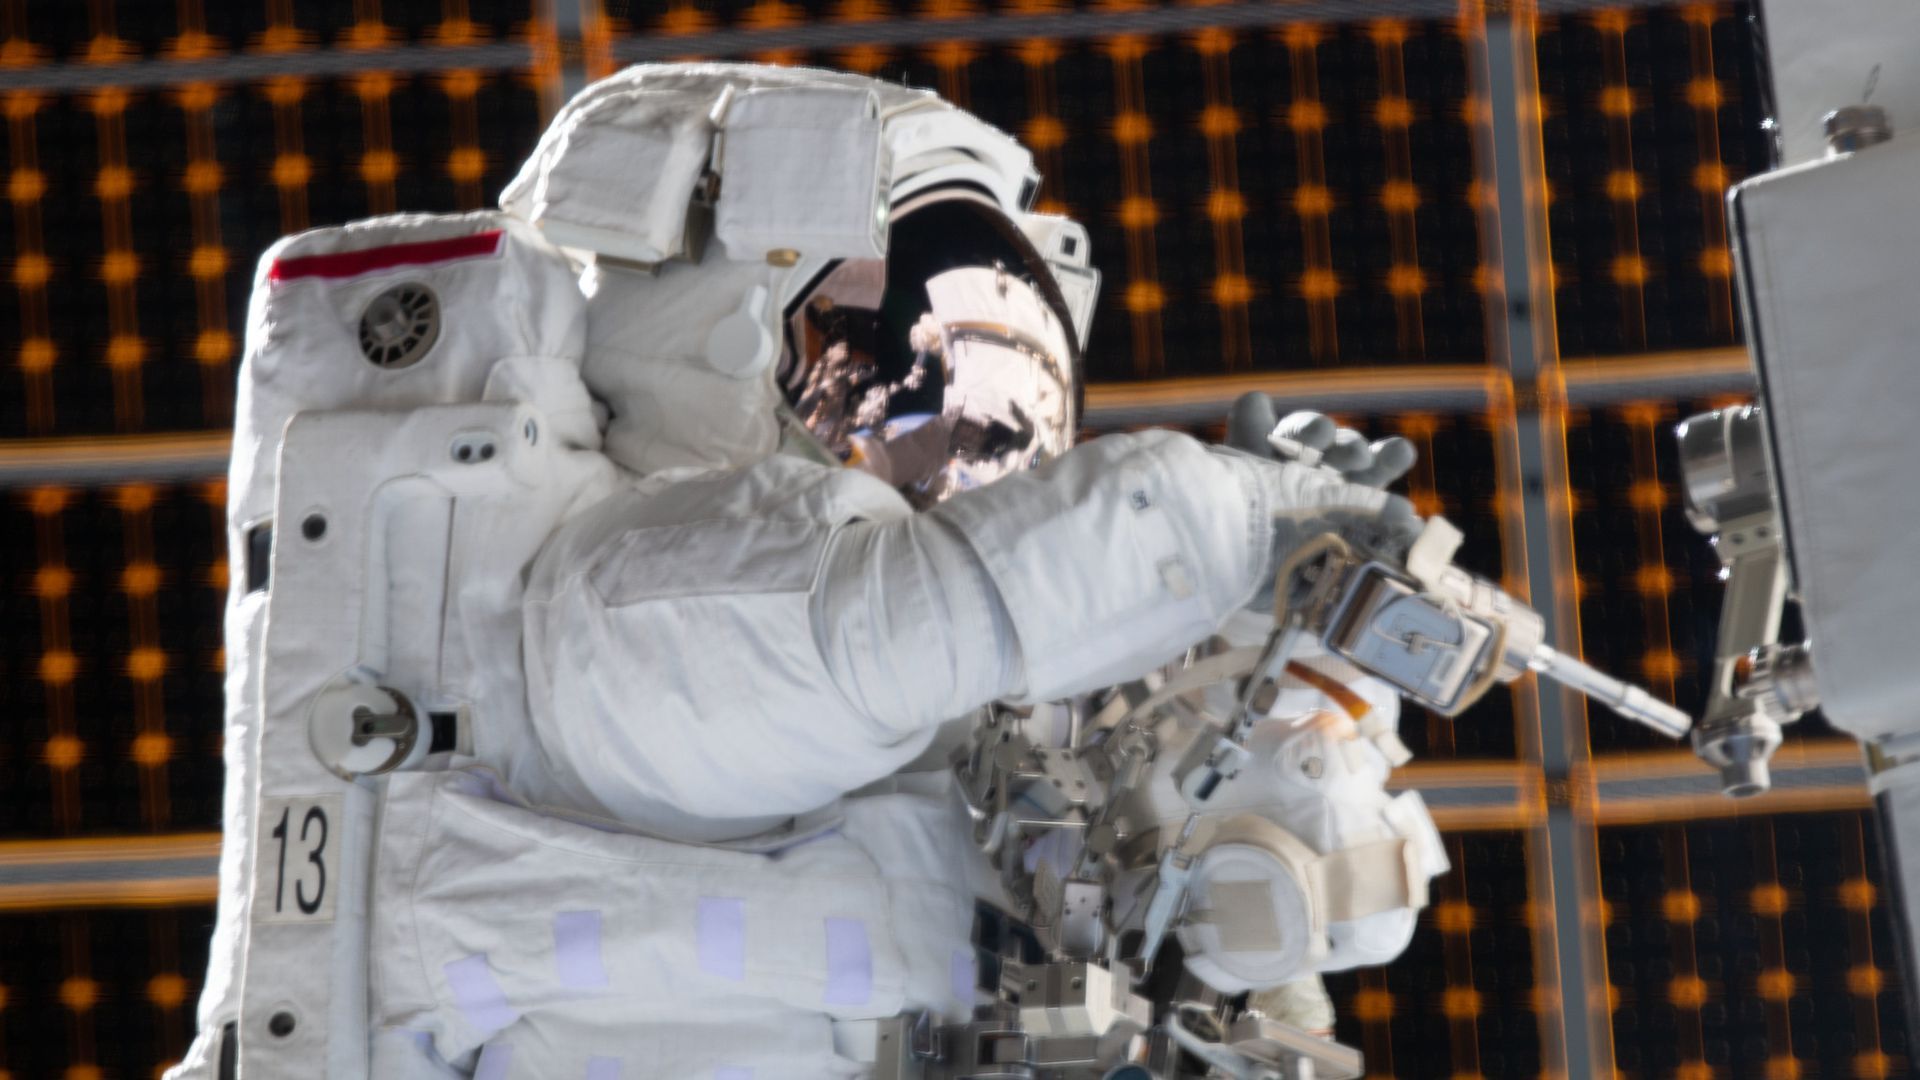 NASA astronaut Jessica Meir on a spacewalk.